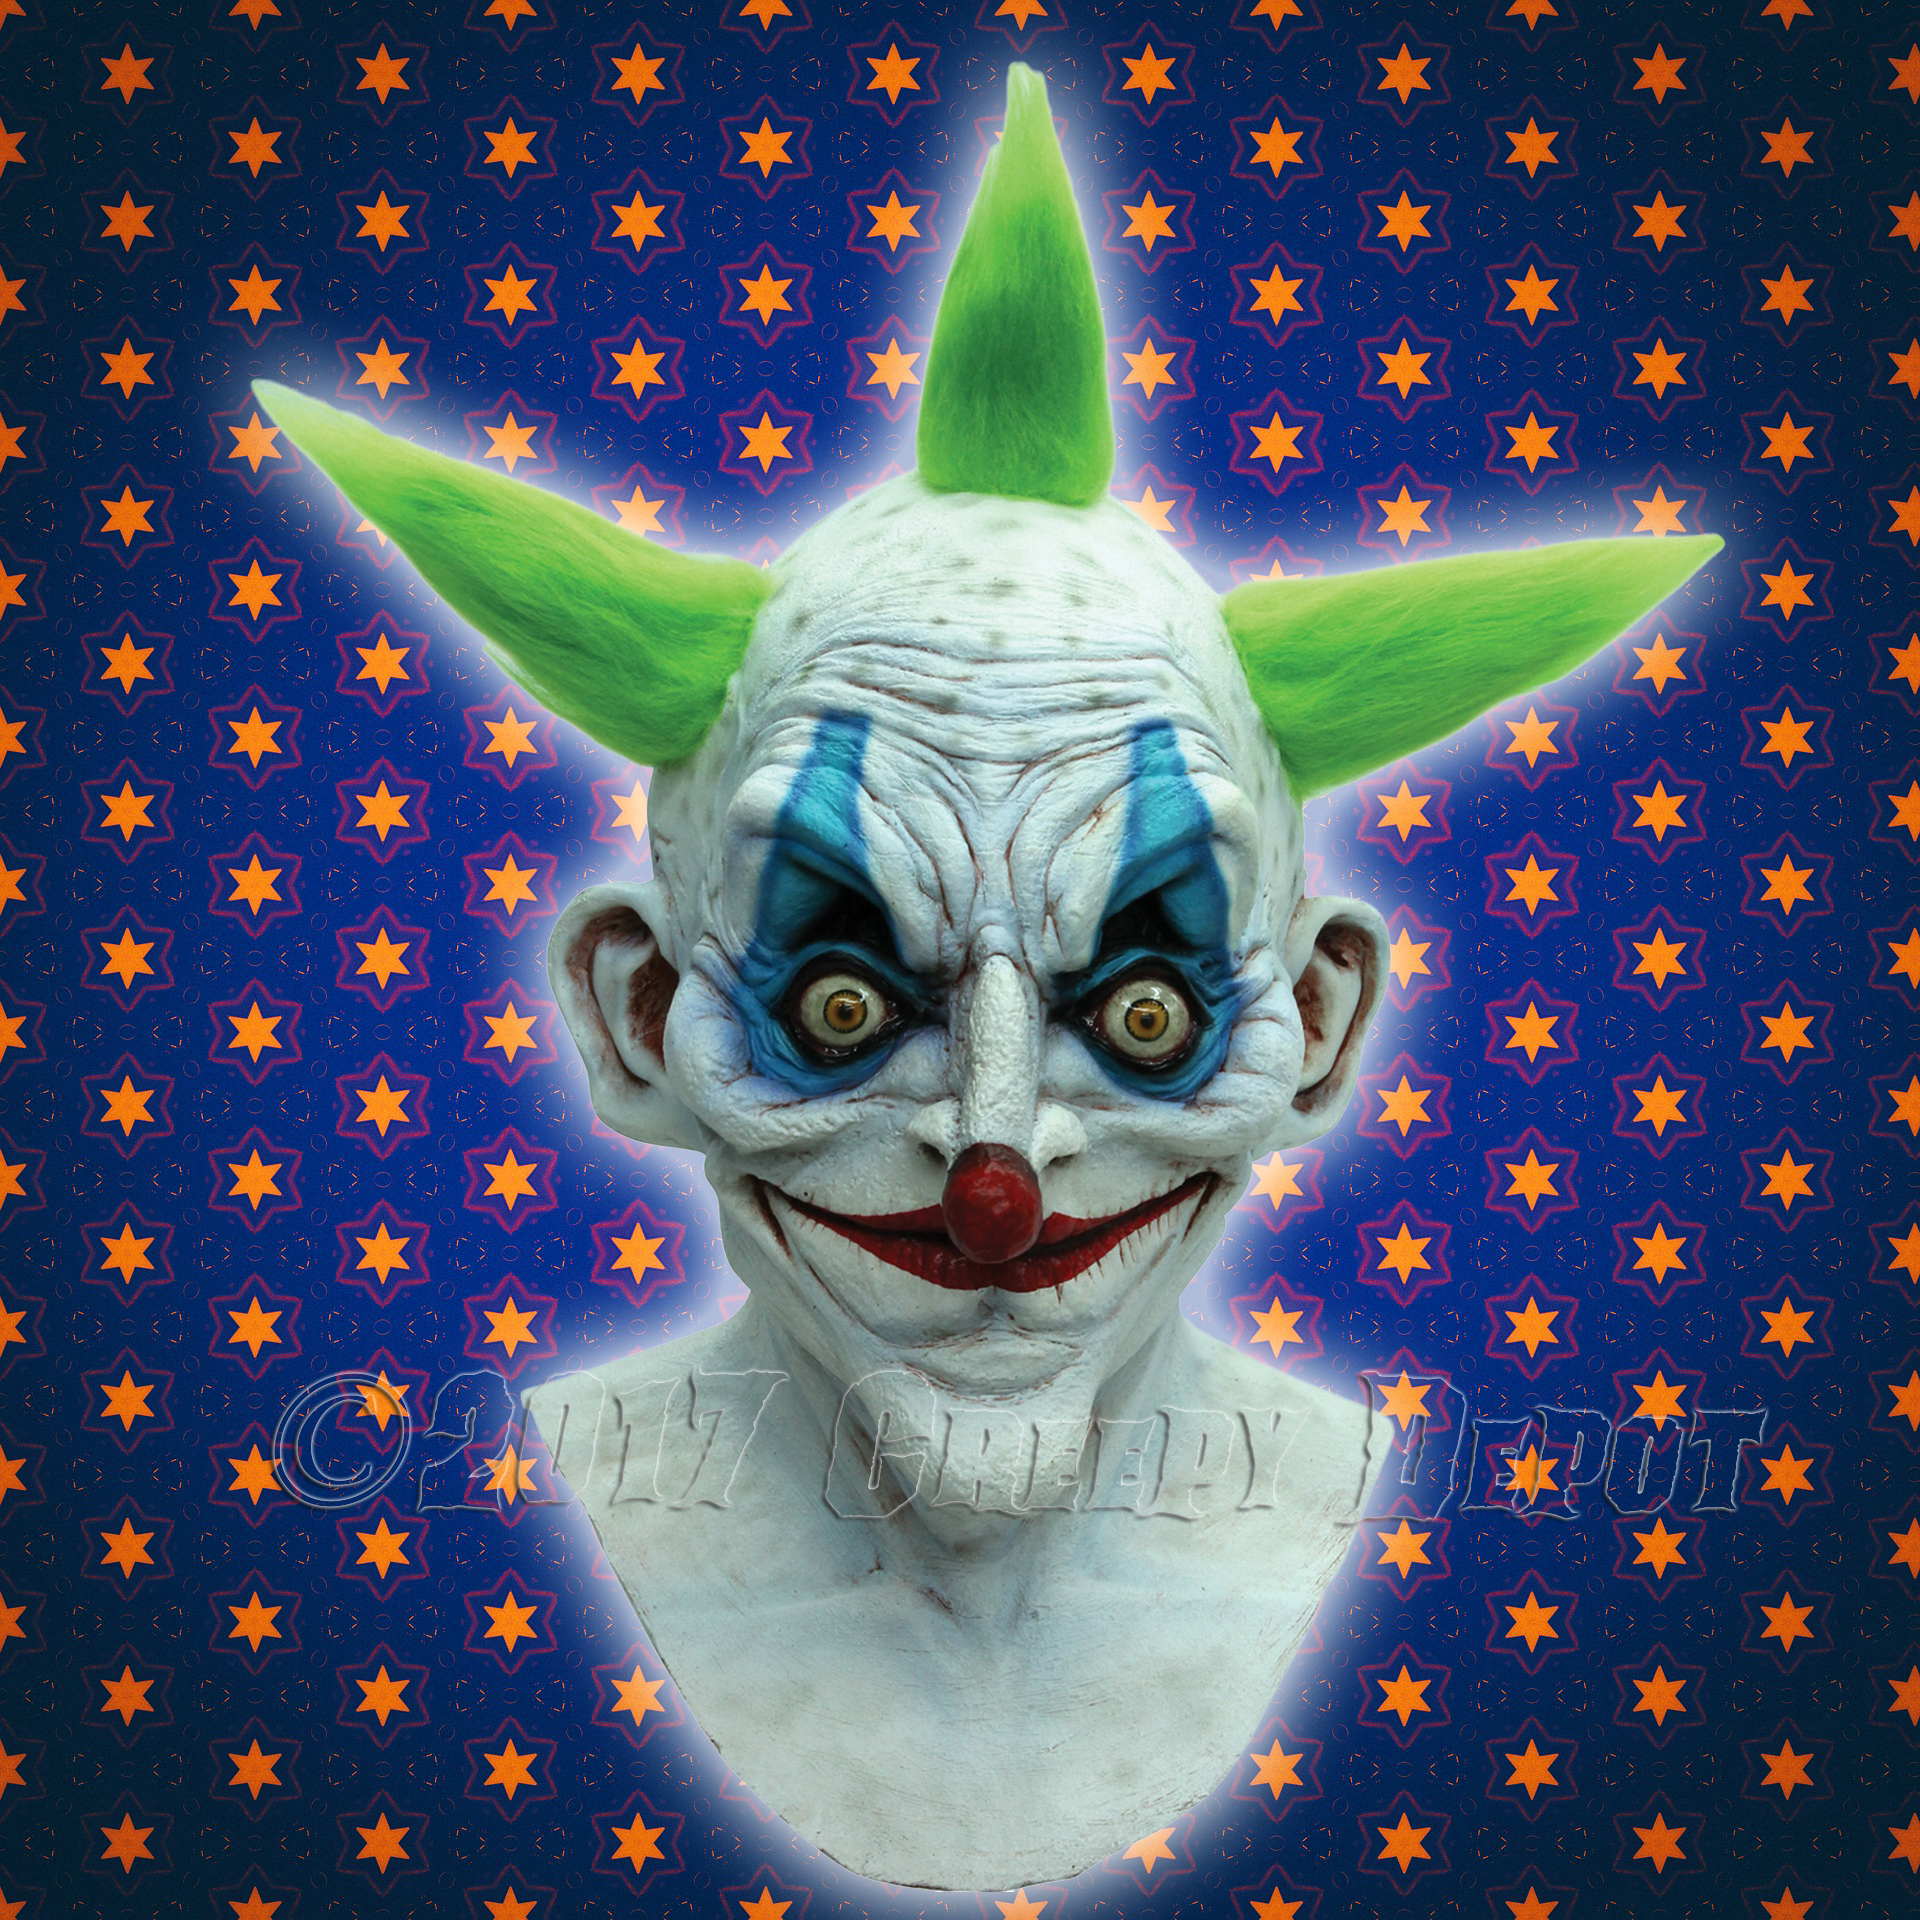 Old Clown Halloween Mask